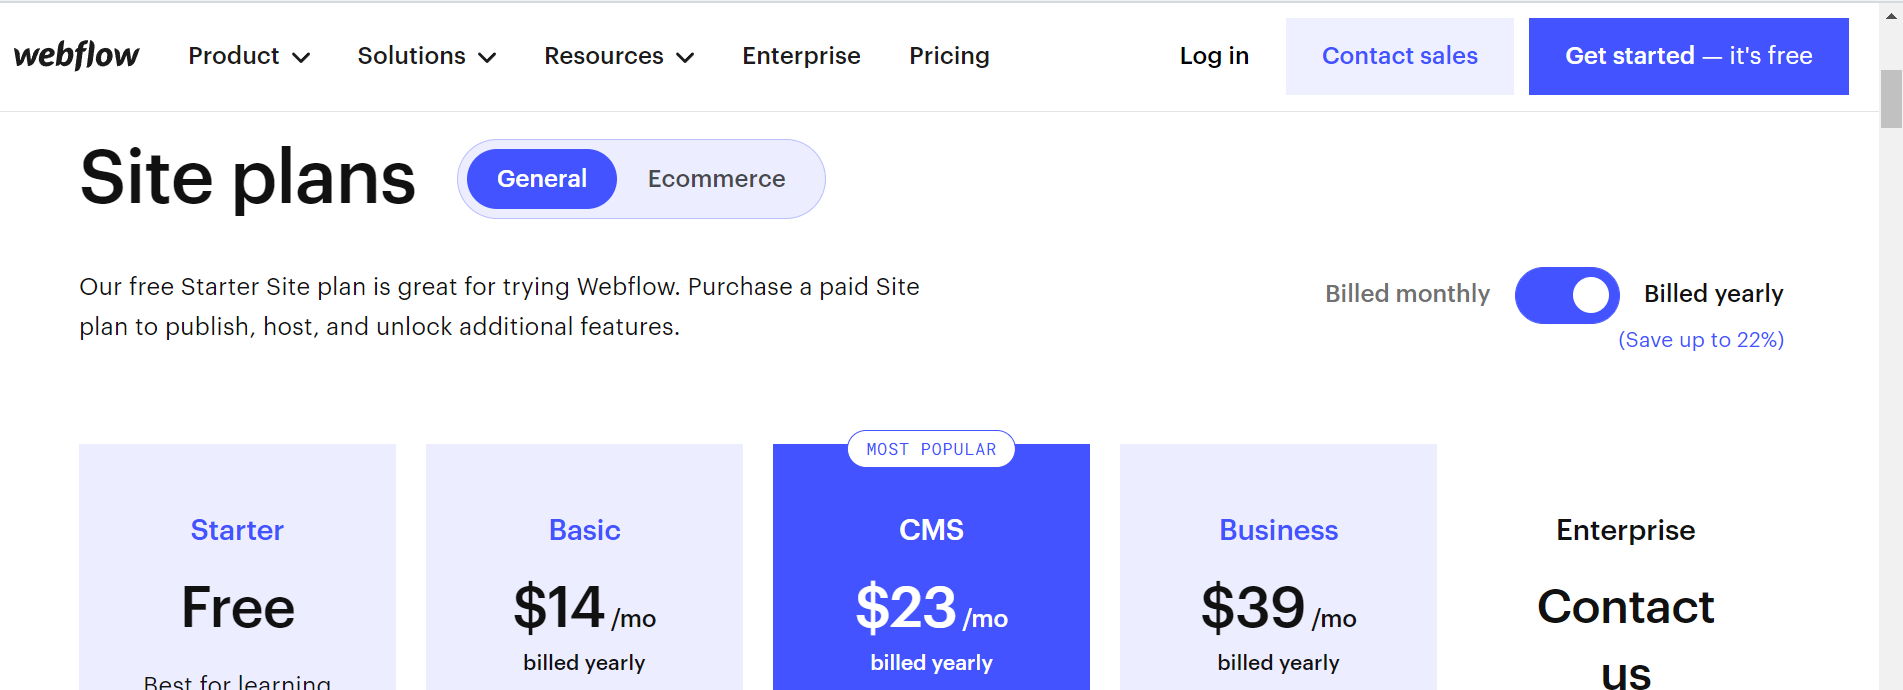 webflow pricing